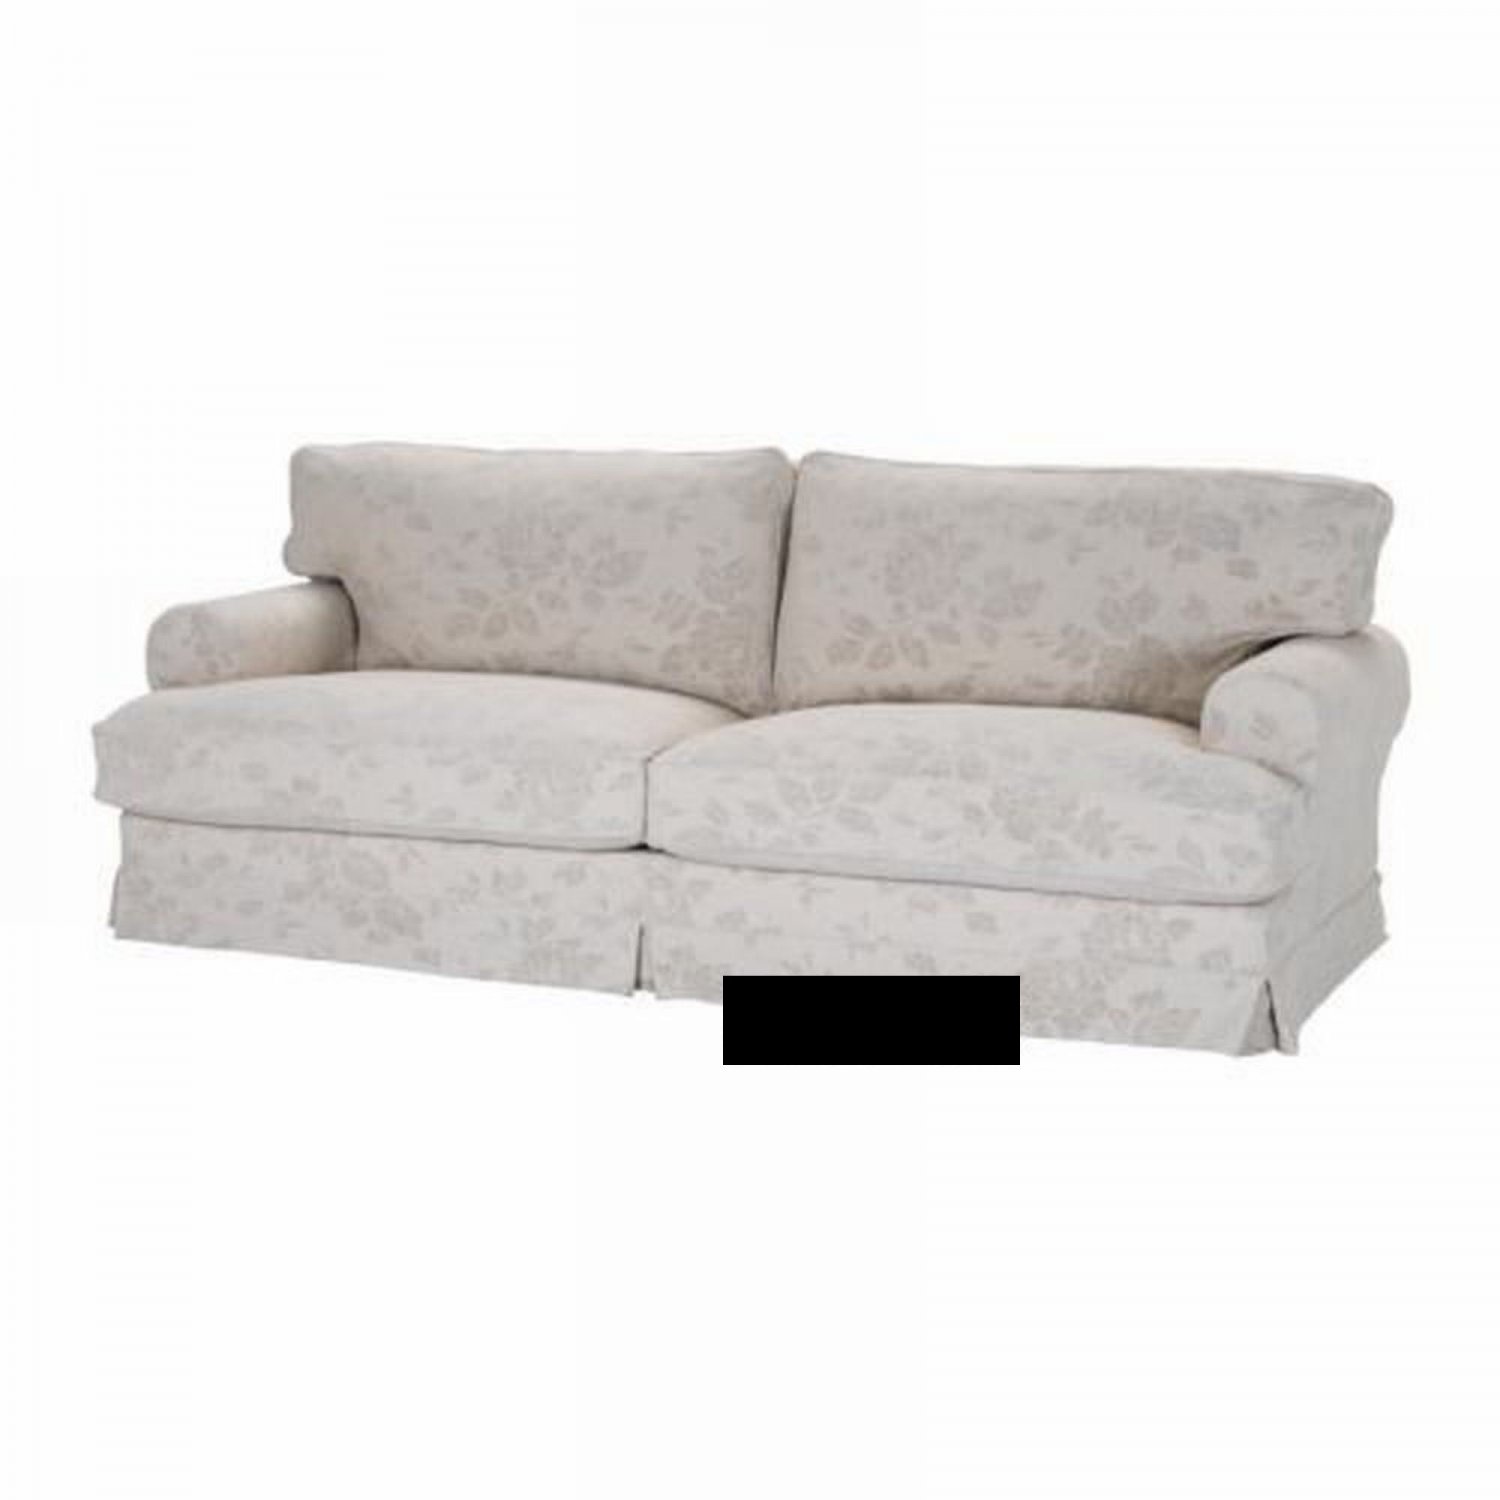 IKEA EKESKOG Sofa Bed SLIPCOVER Sofabed Cover PALYCKE Plycke